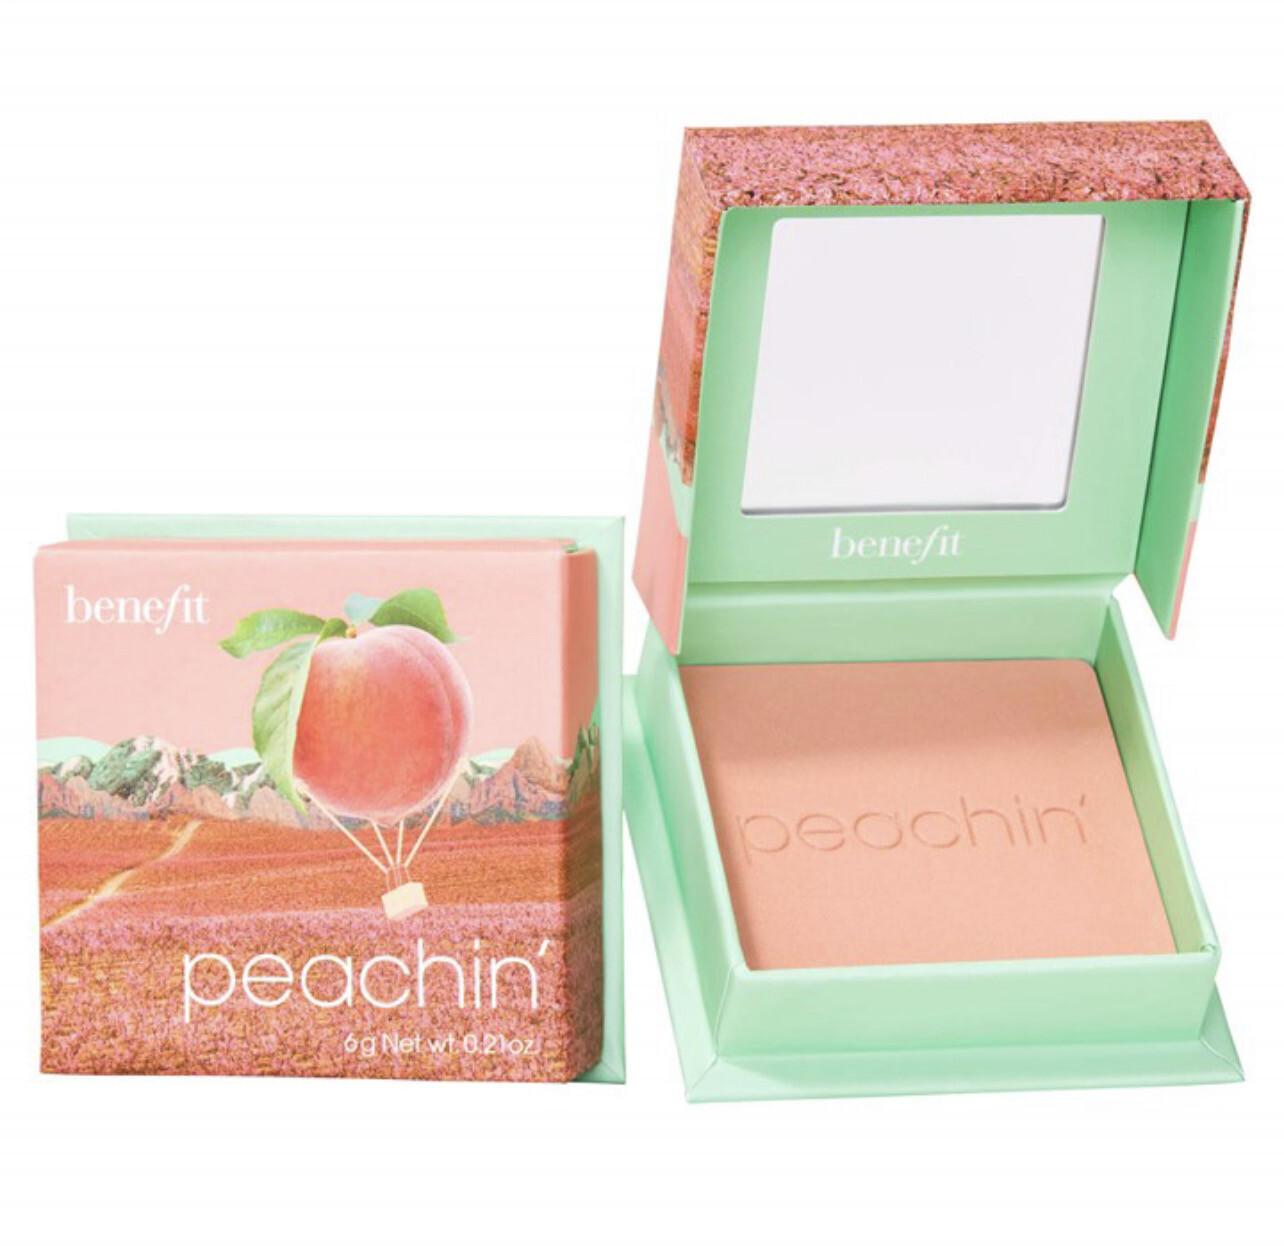 Benefit Cosmetics - Peachin' | Golden Peach Blush